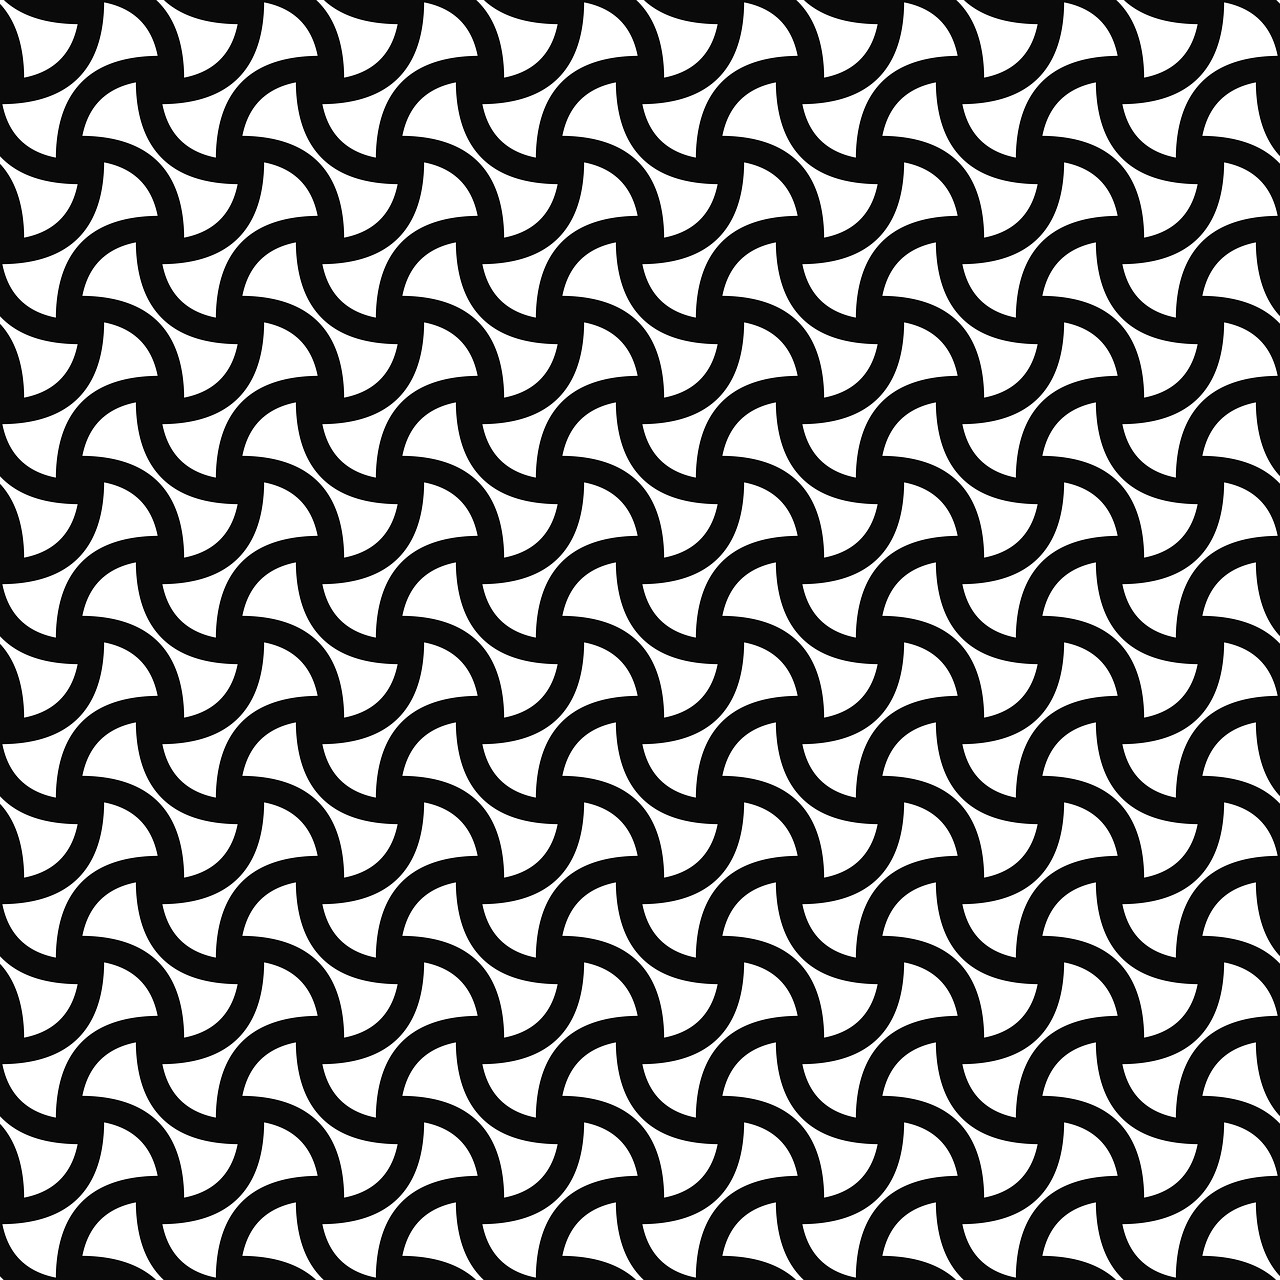 grid pattern background free photo